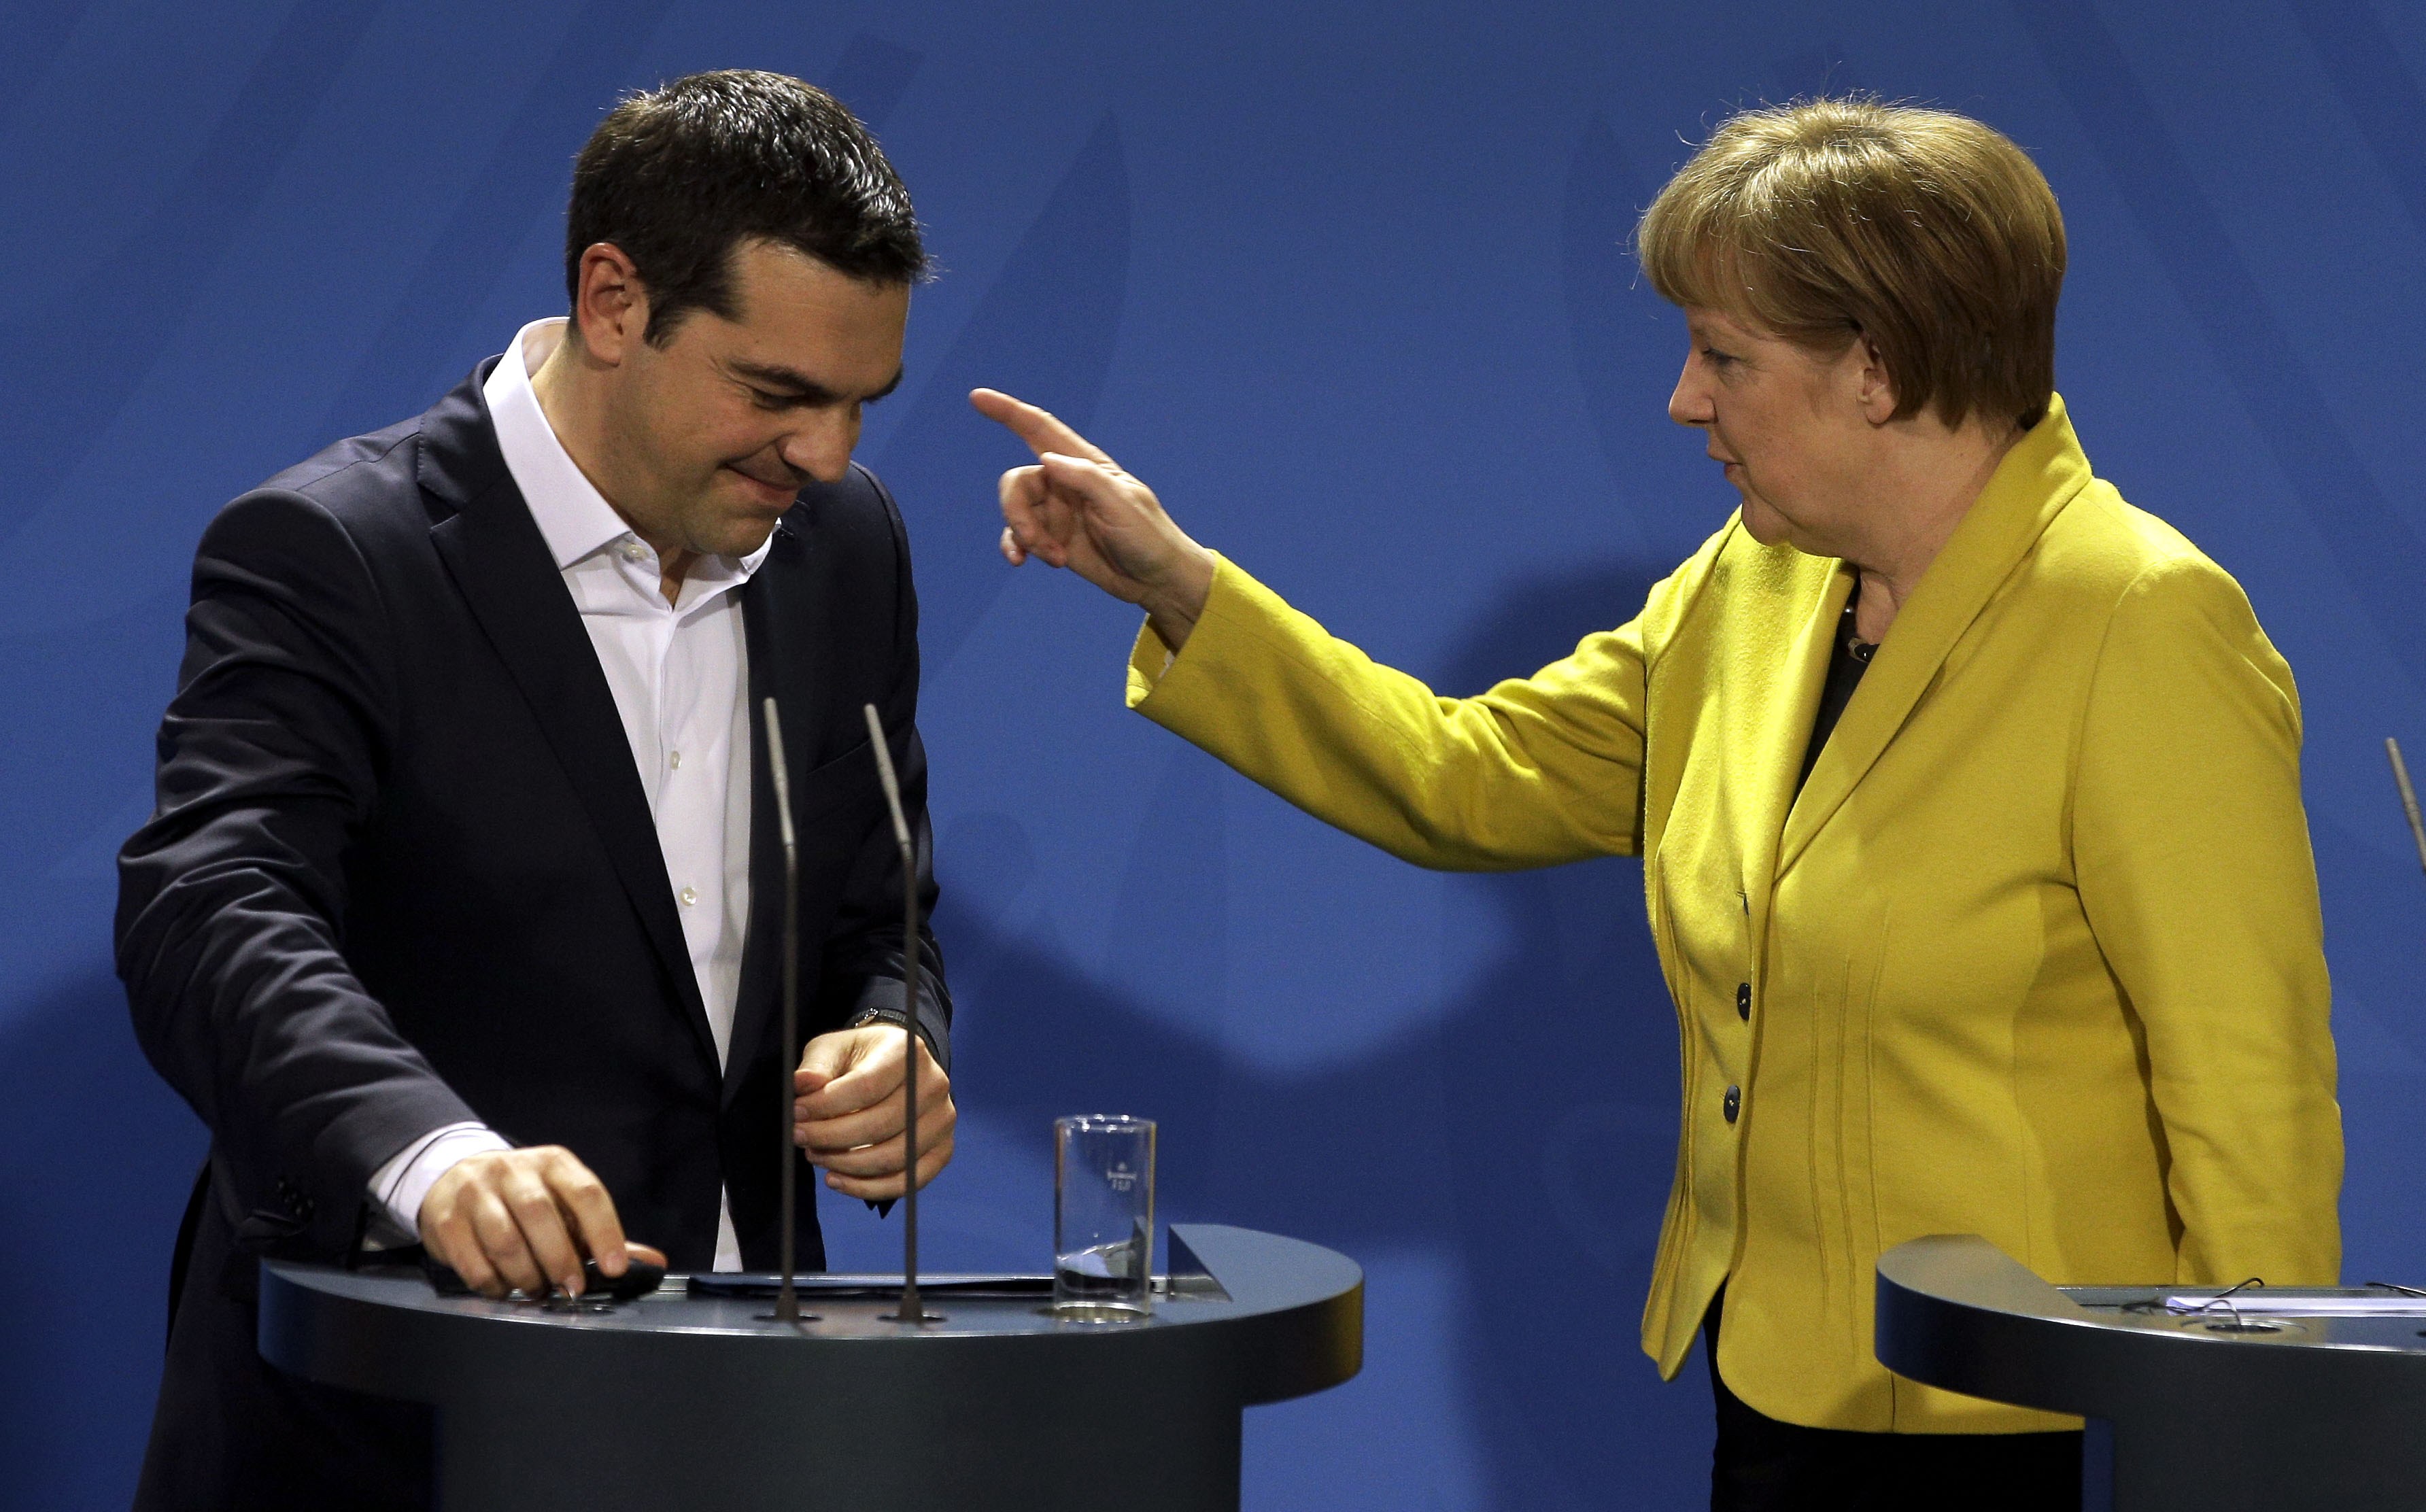 E ναι λοιπόν! Γερμανοί μαζεύουν υπογραφές για να αποζημιώσουν την Ελλάδα!